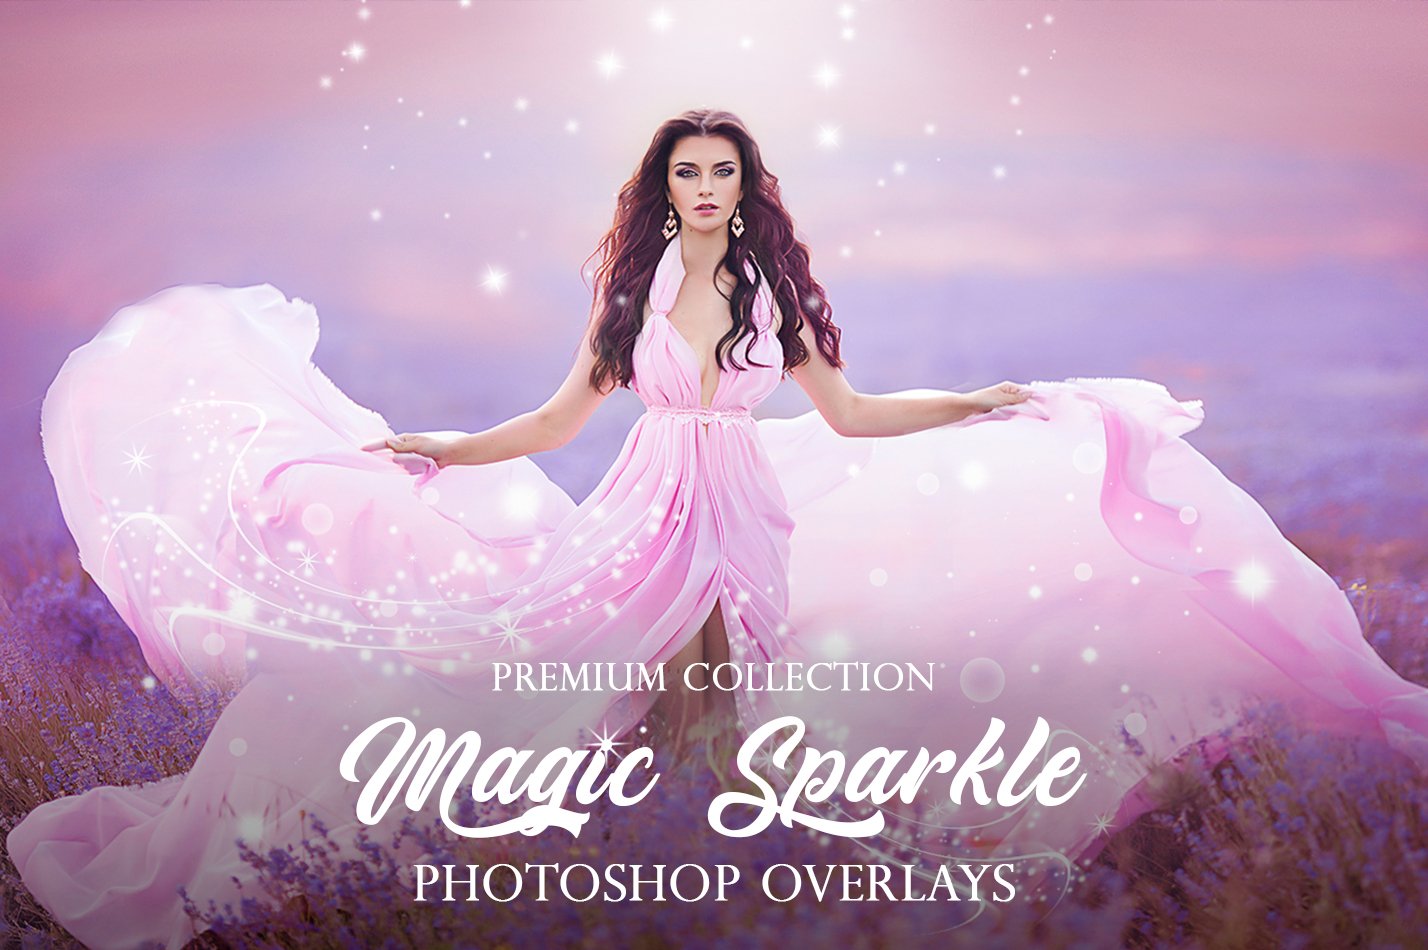 Magic Sparkle Photoshop Overlayscover image.